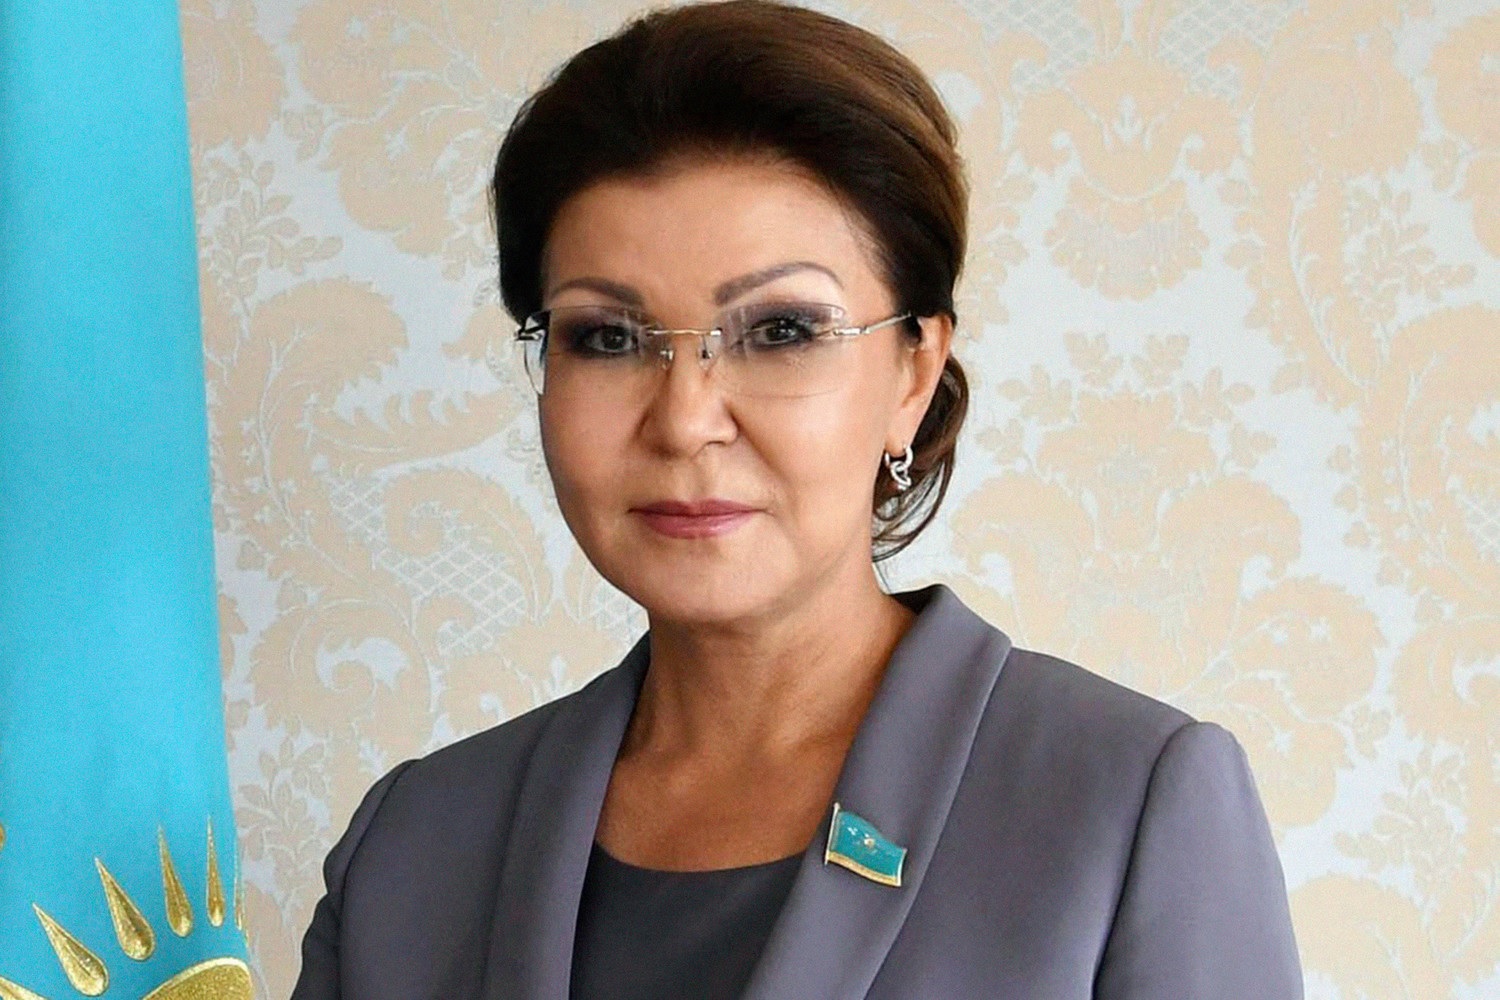 На снимке: Дарига Назарбаева, старшая дочь Н. Назарбаева.